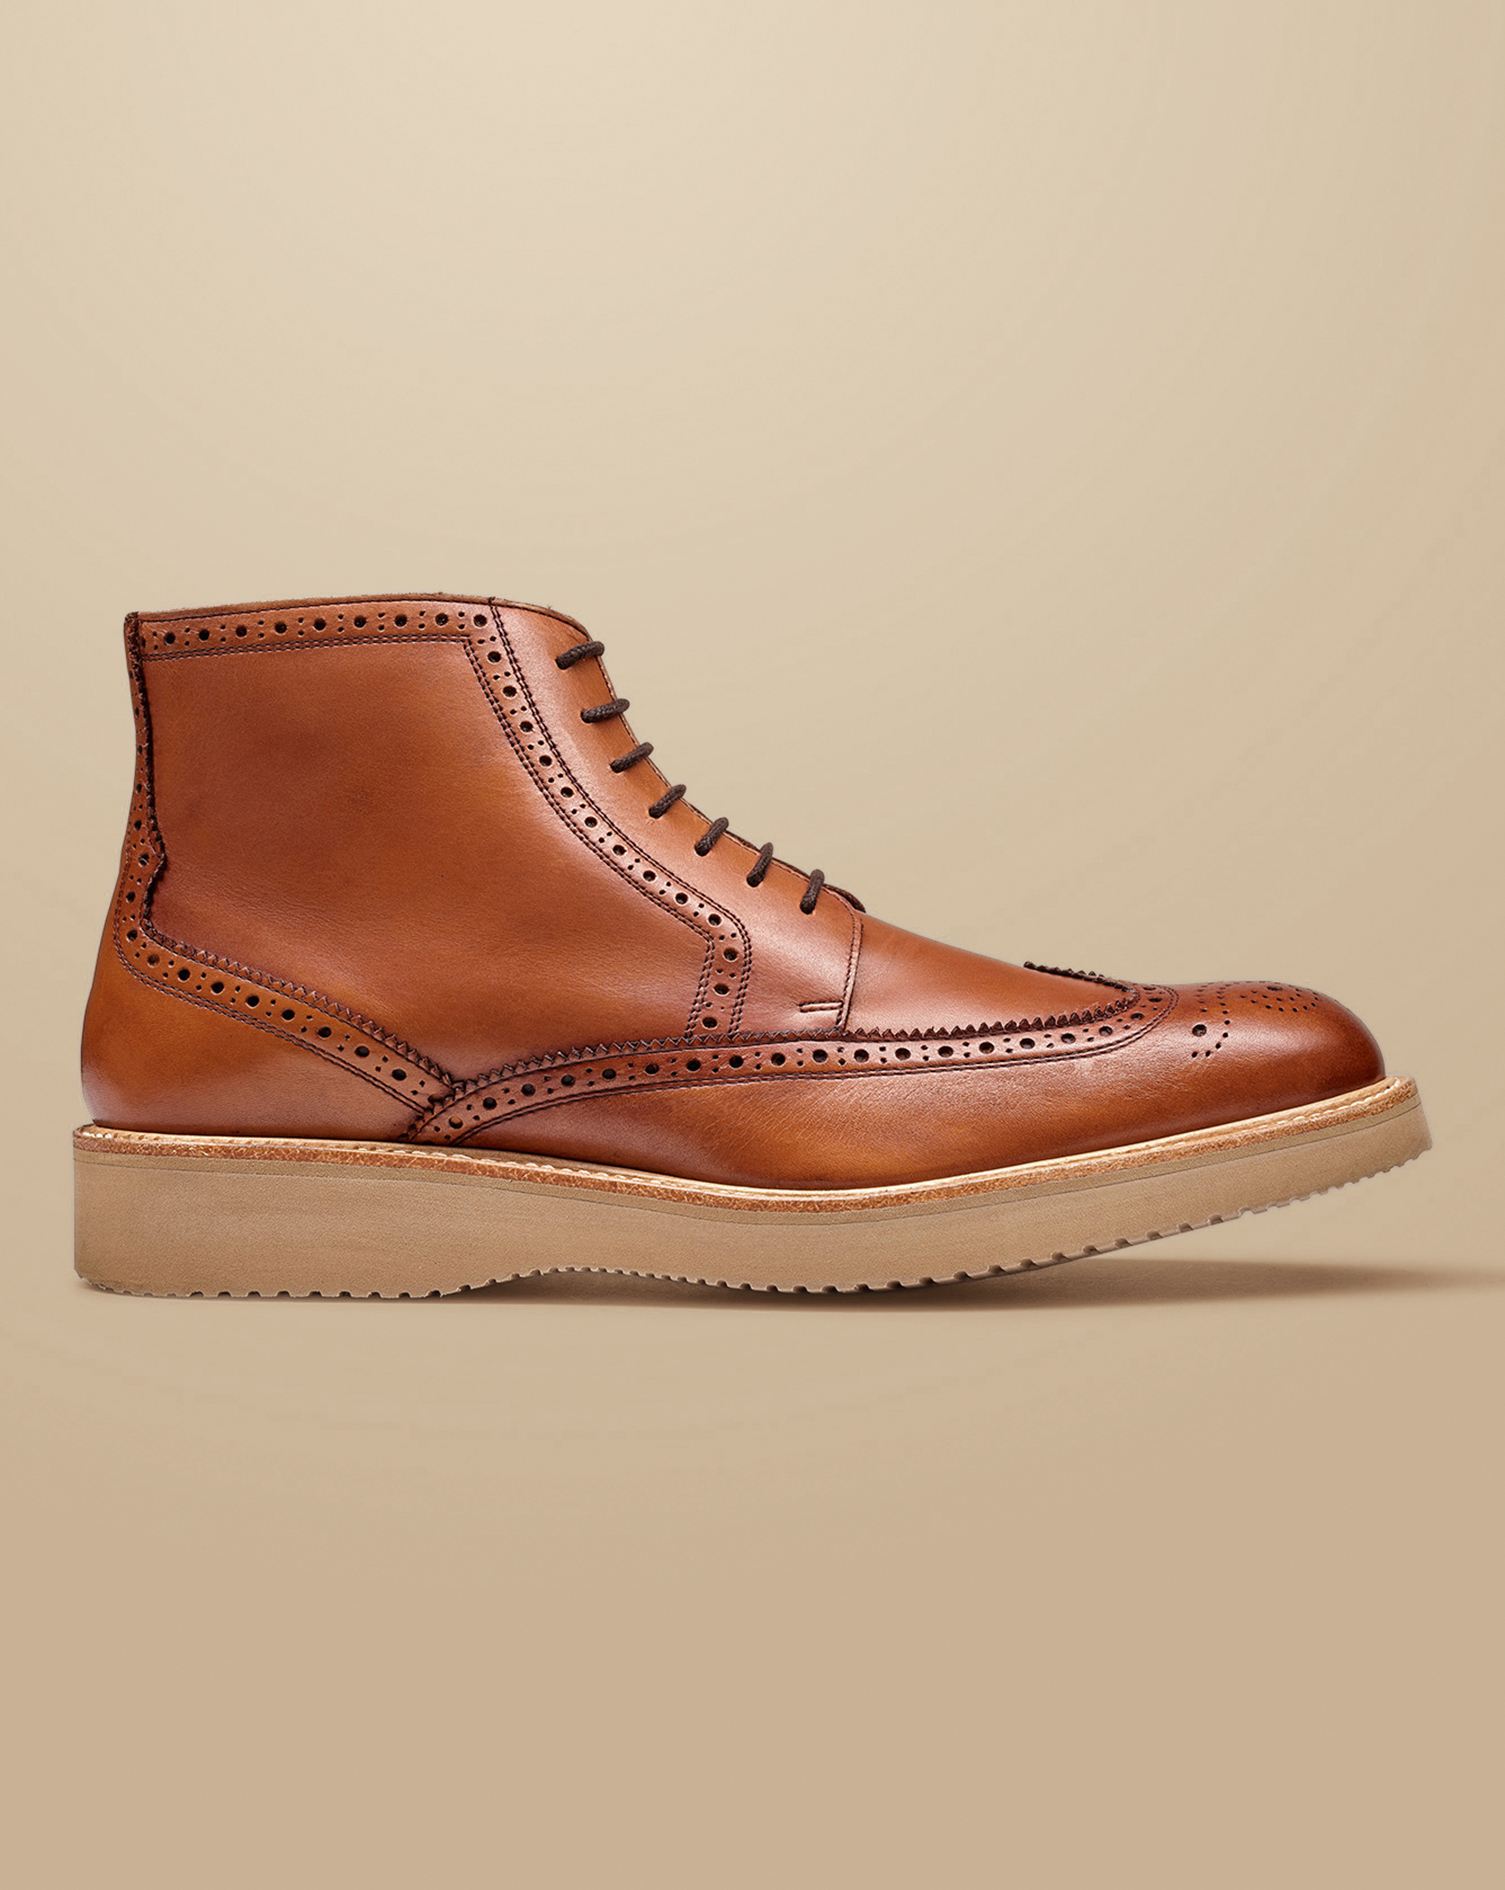 Men's Charles Tyrwhitt Brogue Boots - Dark Tan Brown Size 11 Leather
